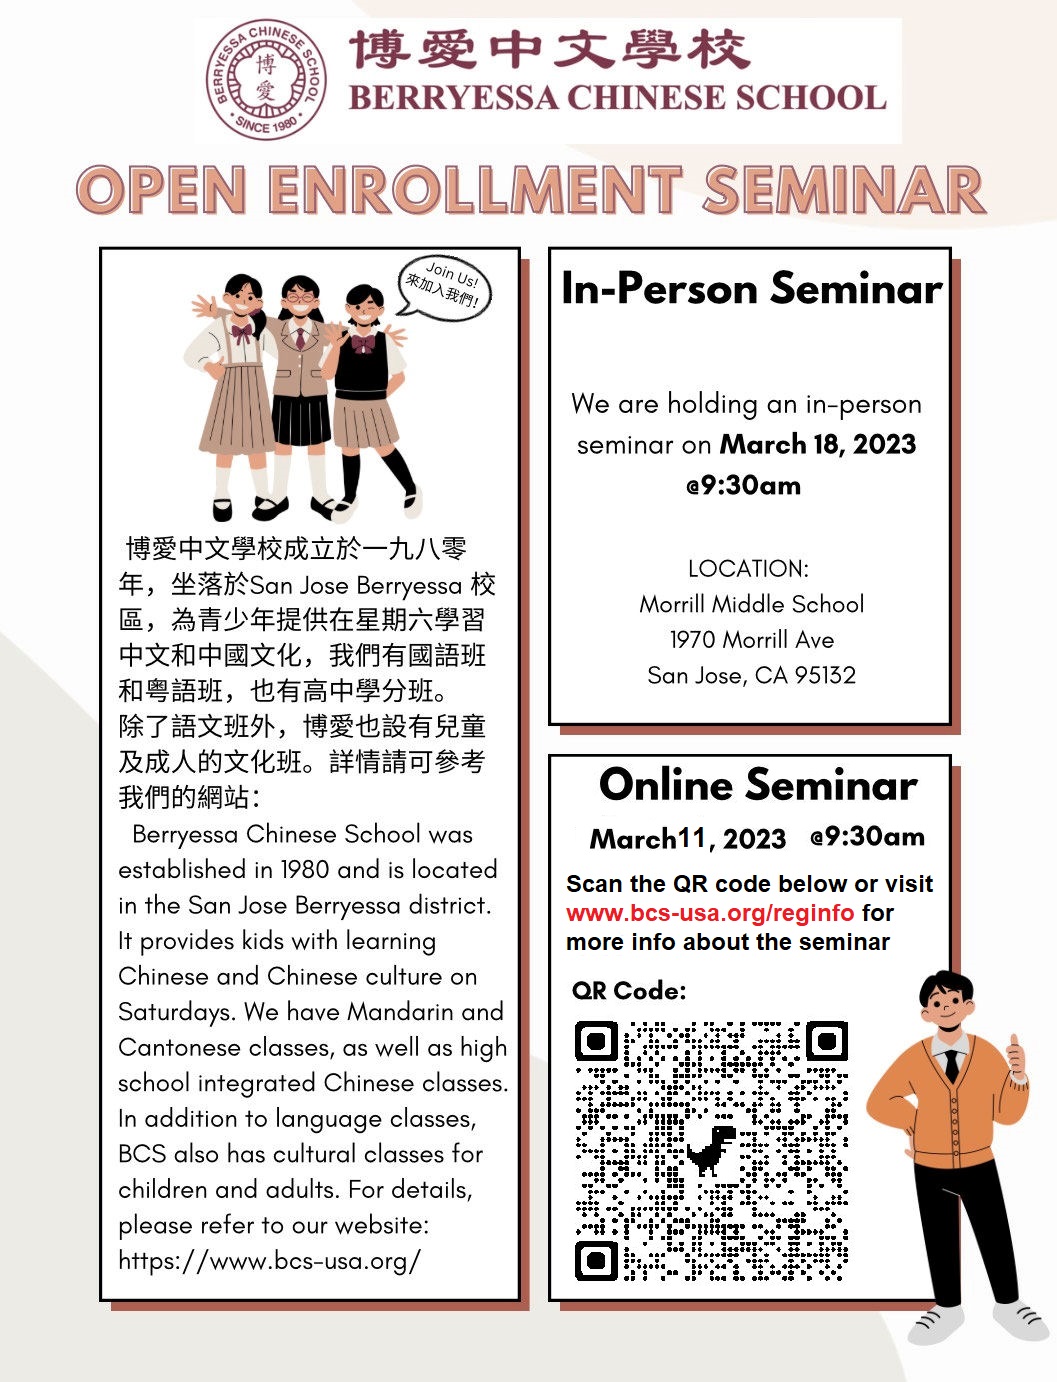 Open Enrollment Seminar is coming up!